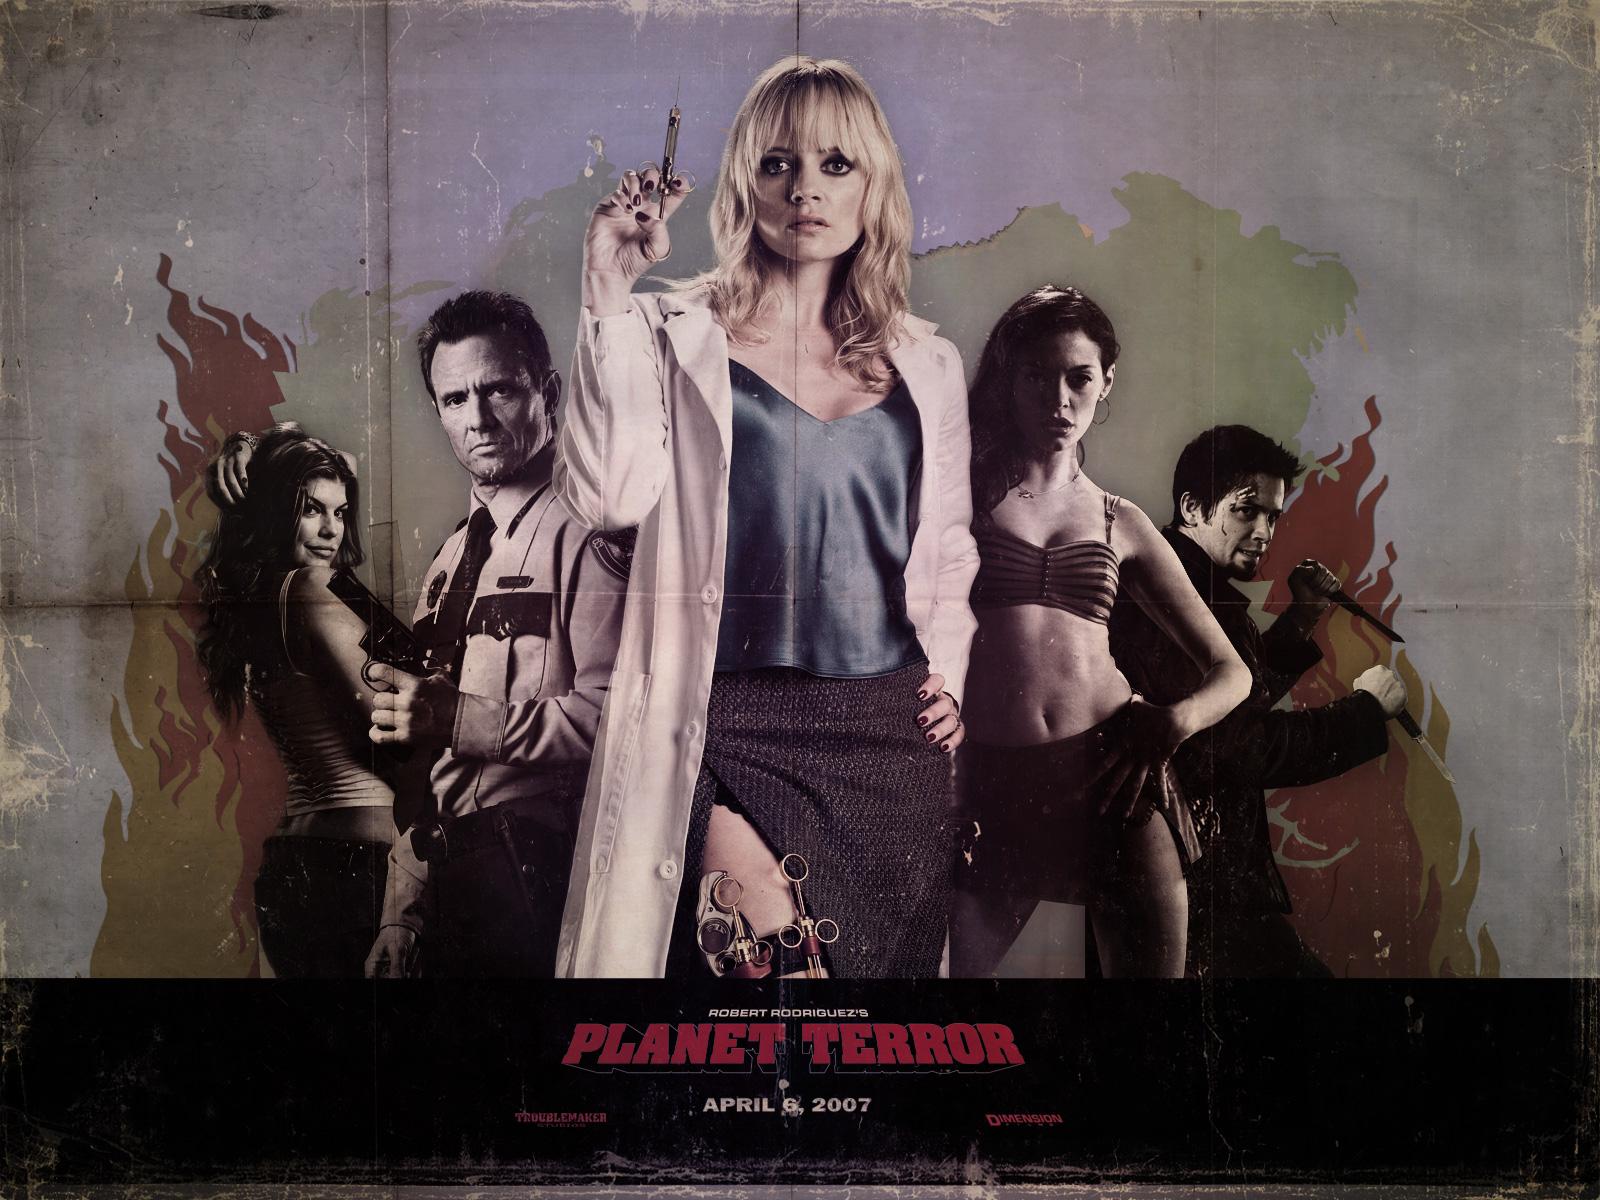 Movie Planet Terror HD Wallpaper | Background Image